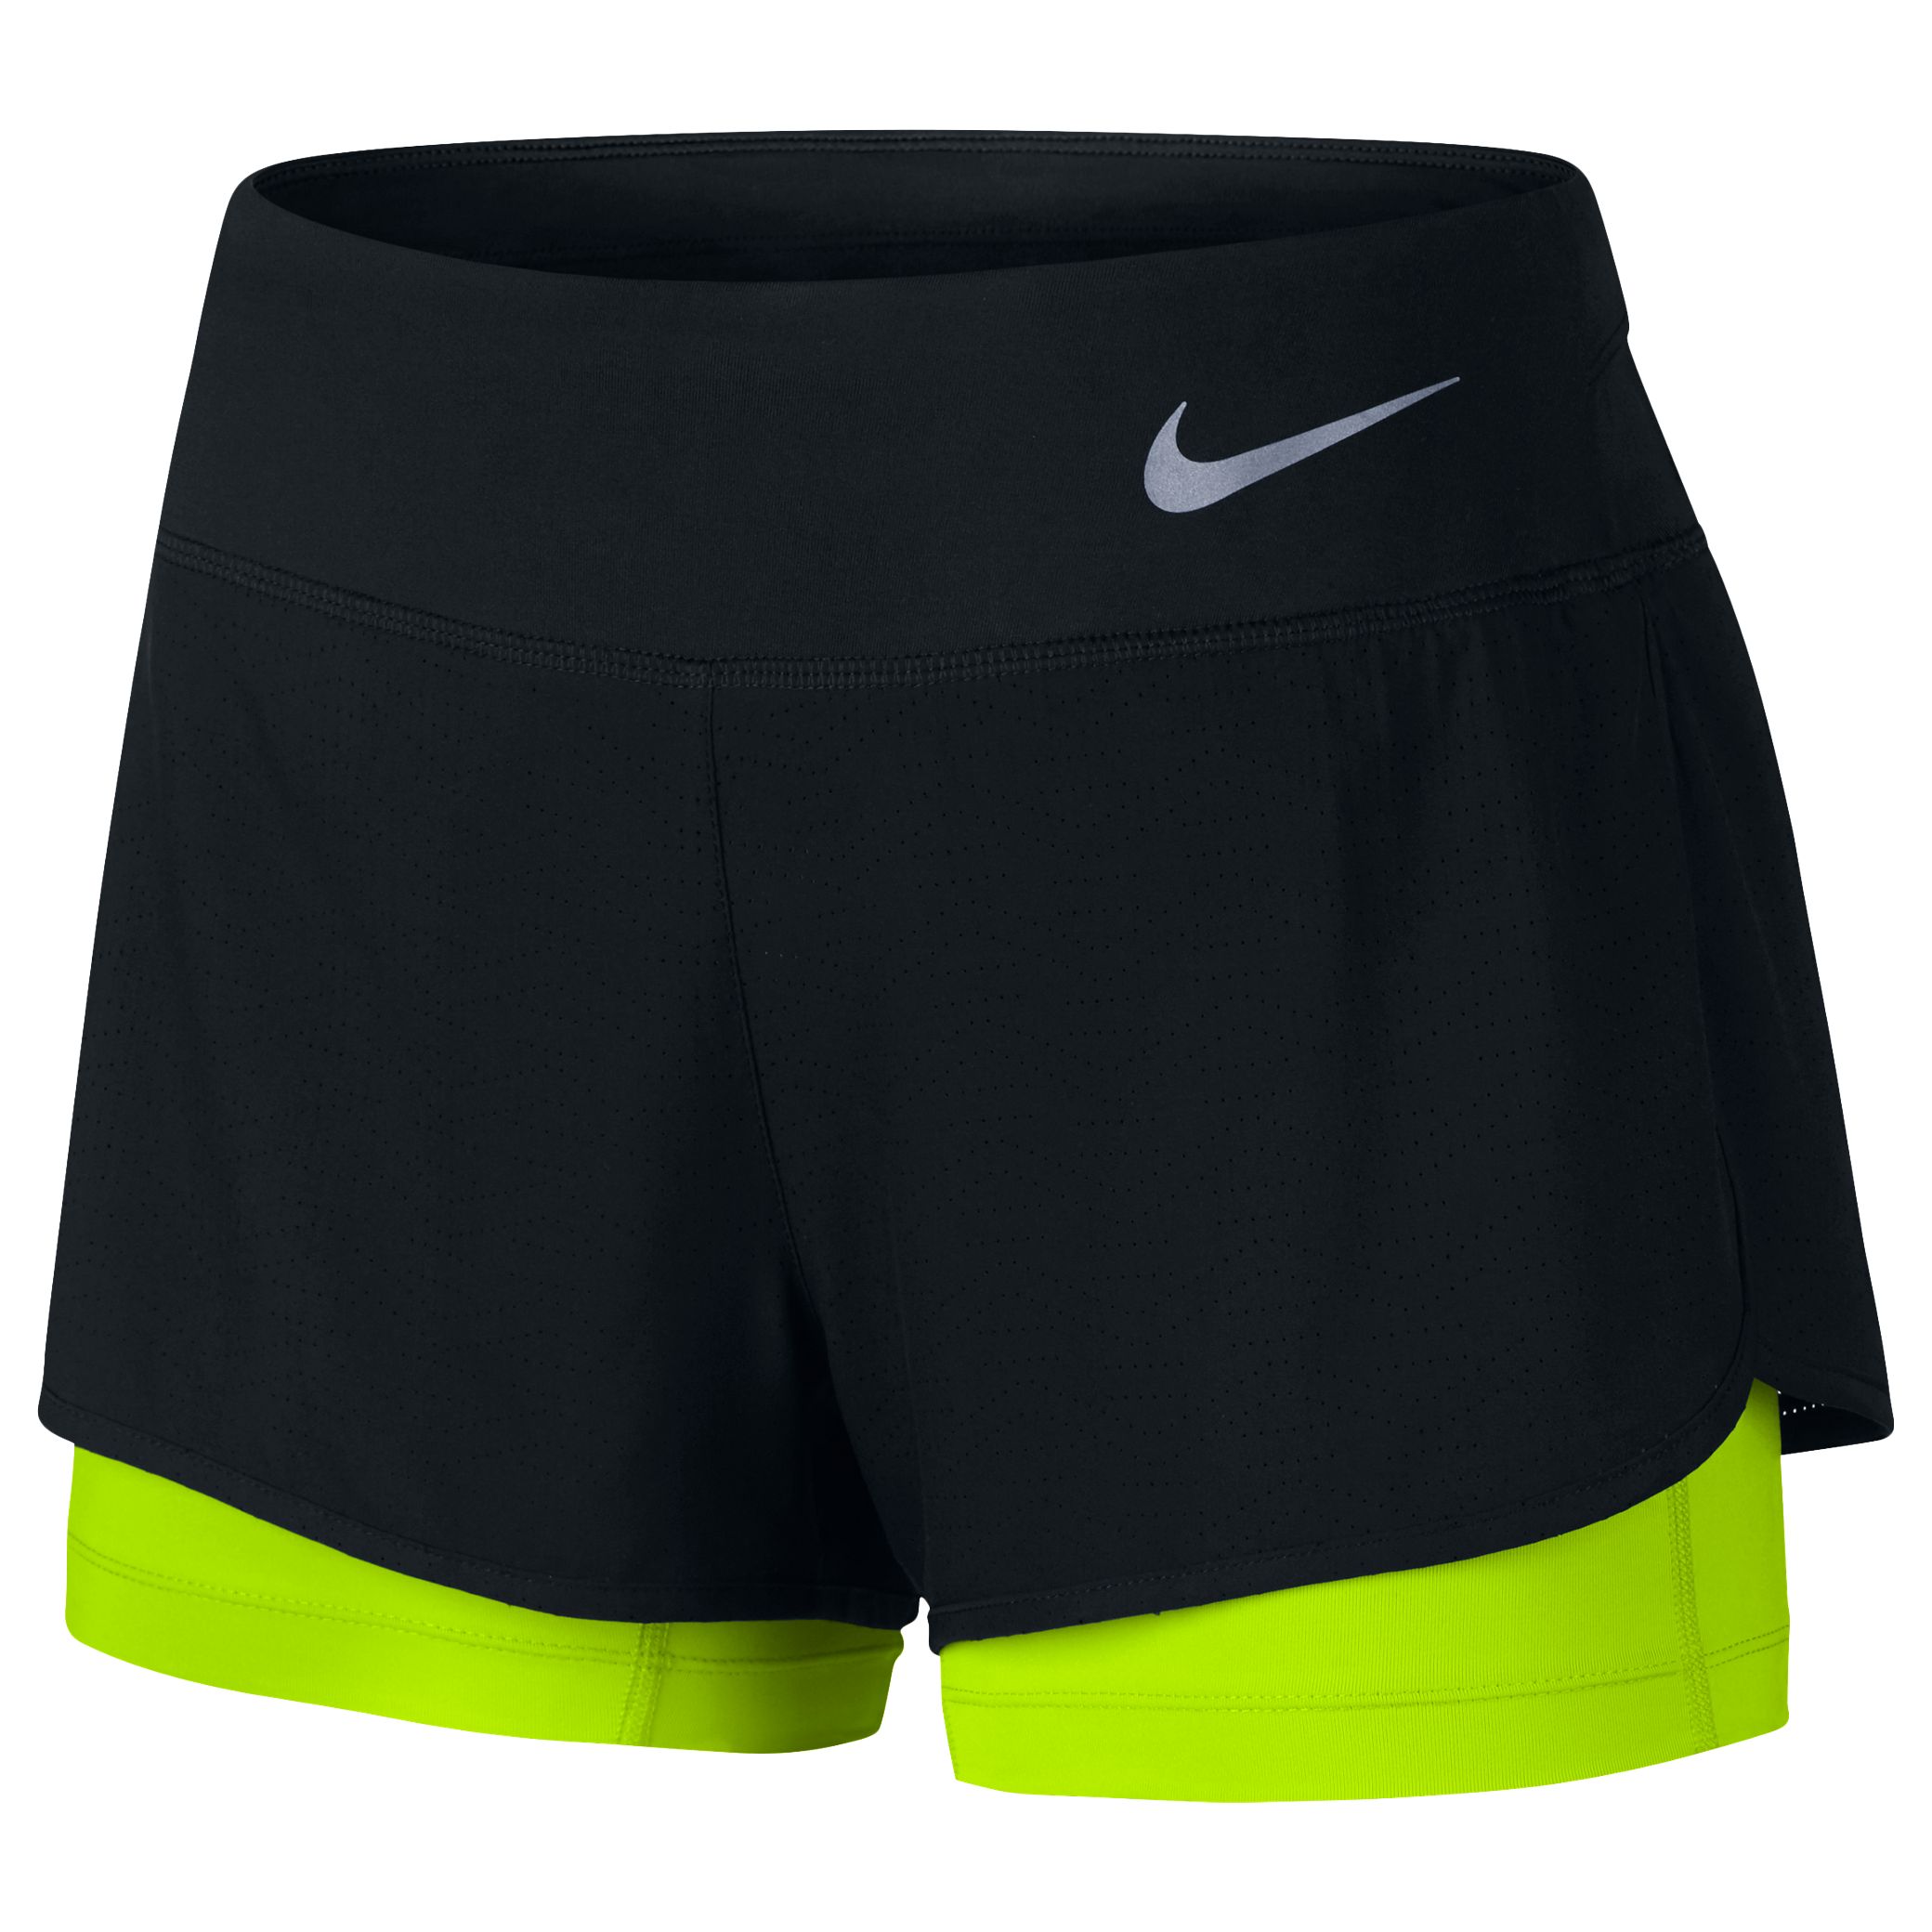 Черные шорты найк. Шорты Nike Dri Fit теннис. Шорты Nike keep Training. Синие шорты Nike 933324-435. Шорты Nike Dri Fit женские.